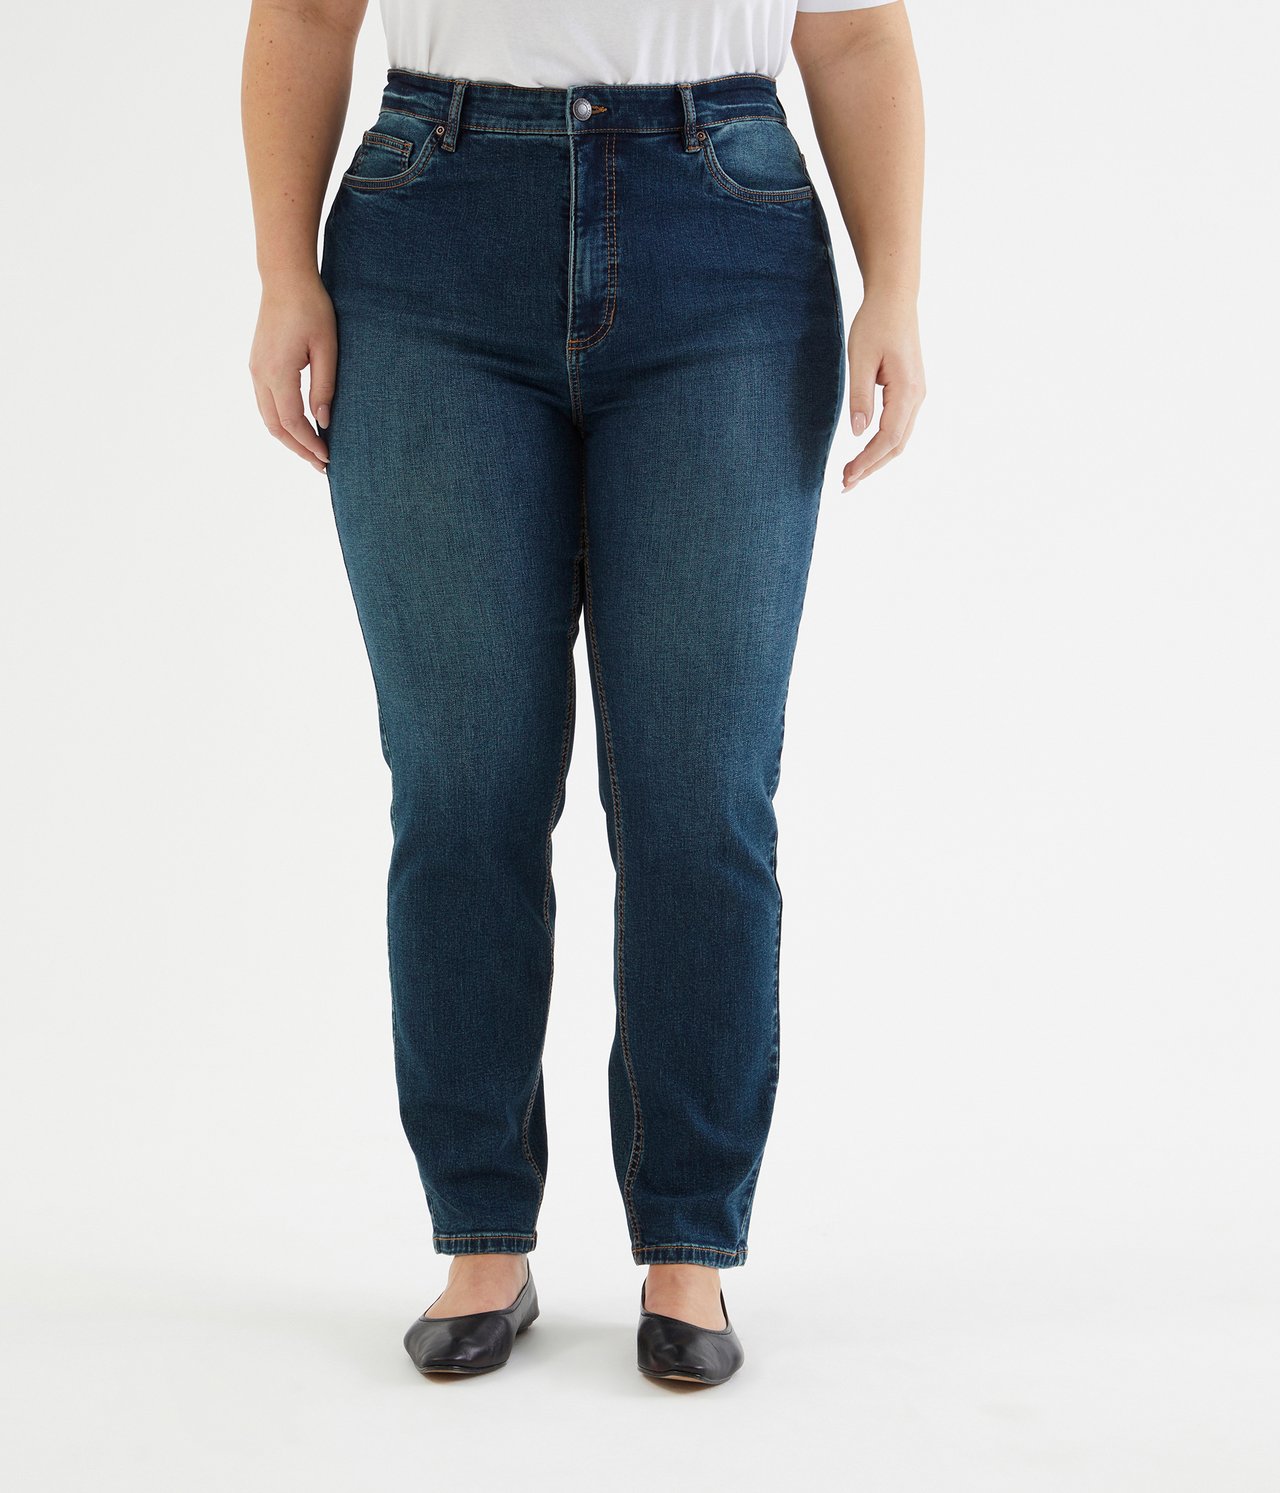 Jenny jeans straight slim fit Denim - 44 - 1